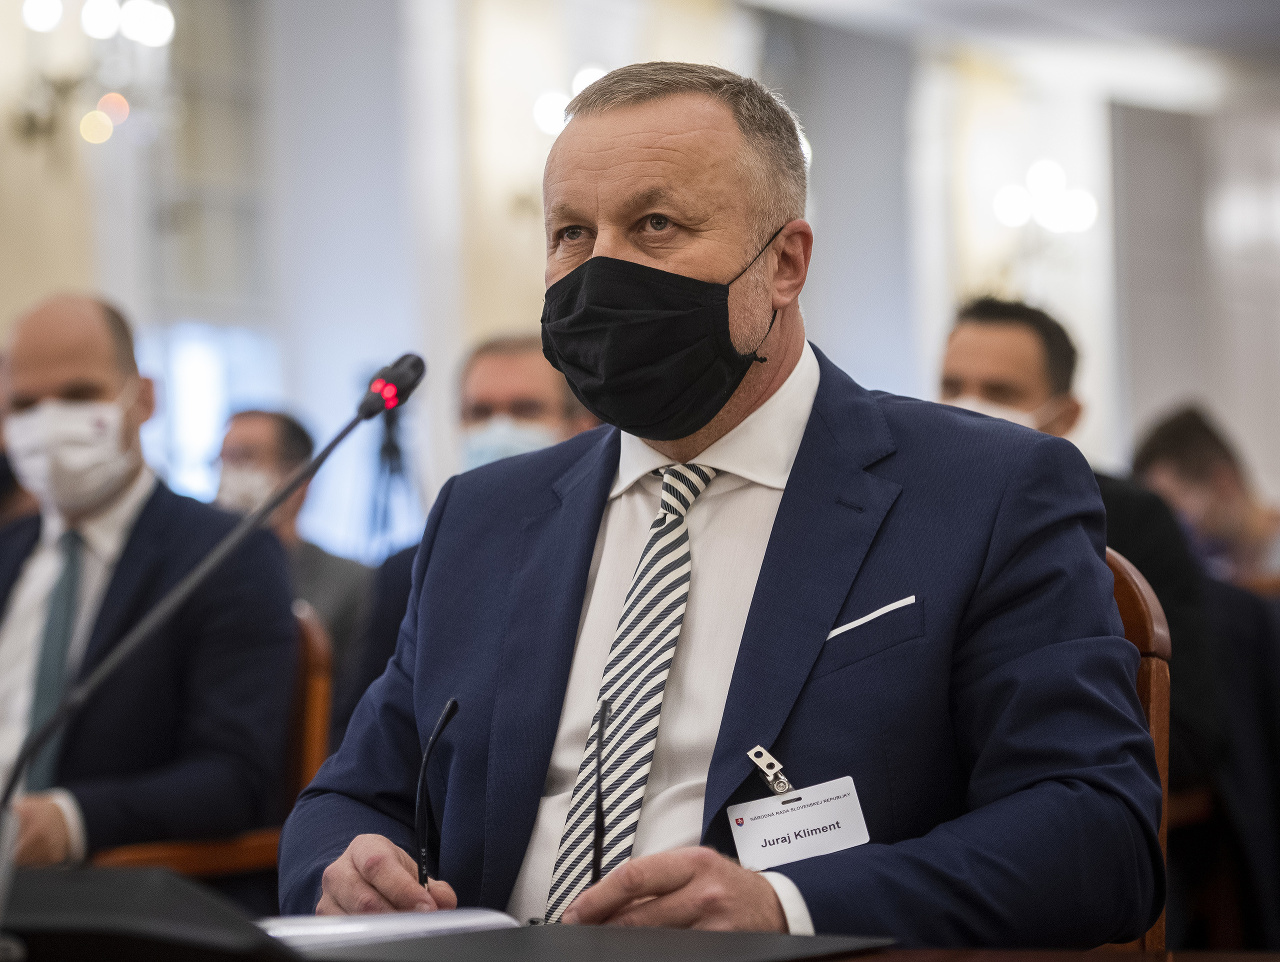 Na snímke kandidát na generálneho prokurátora Juraj Kliment